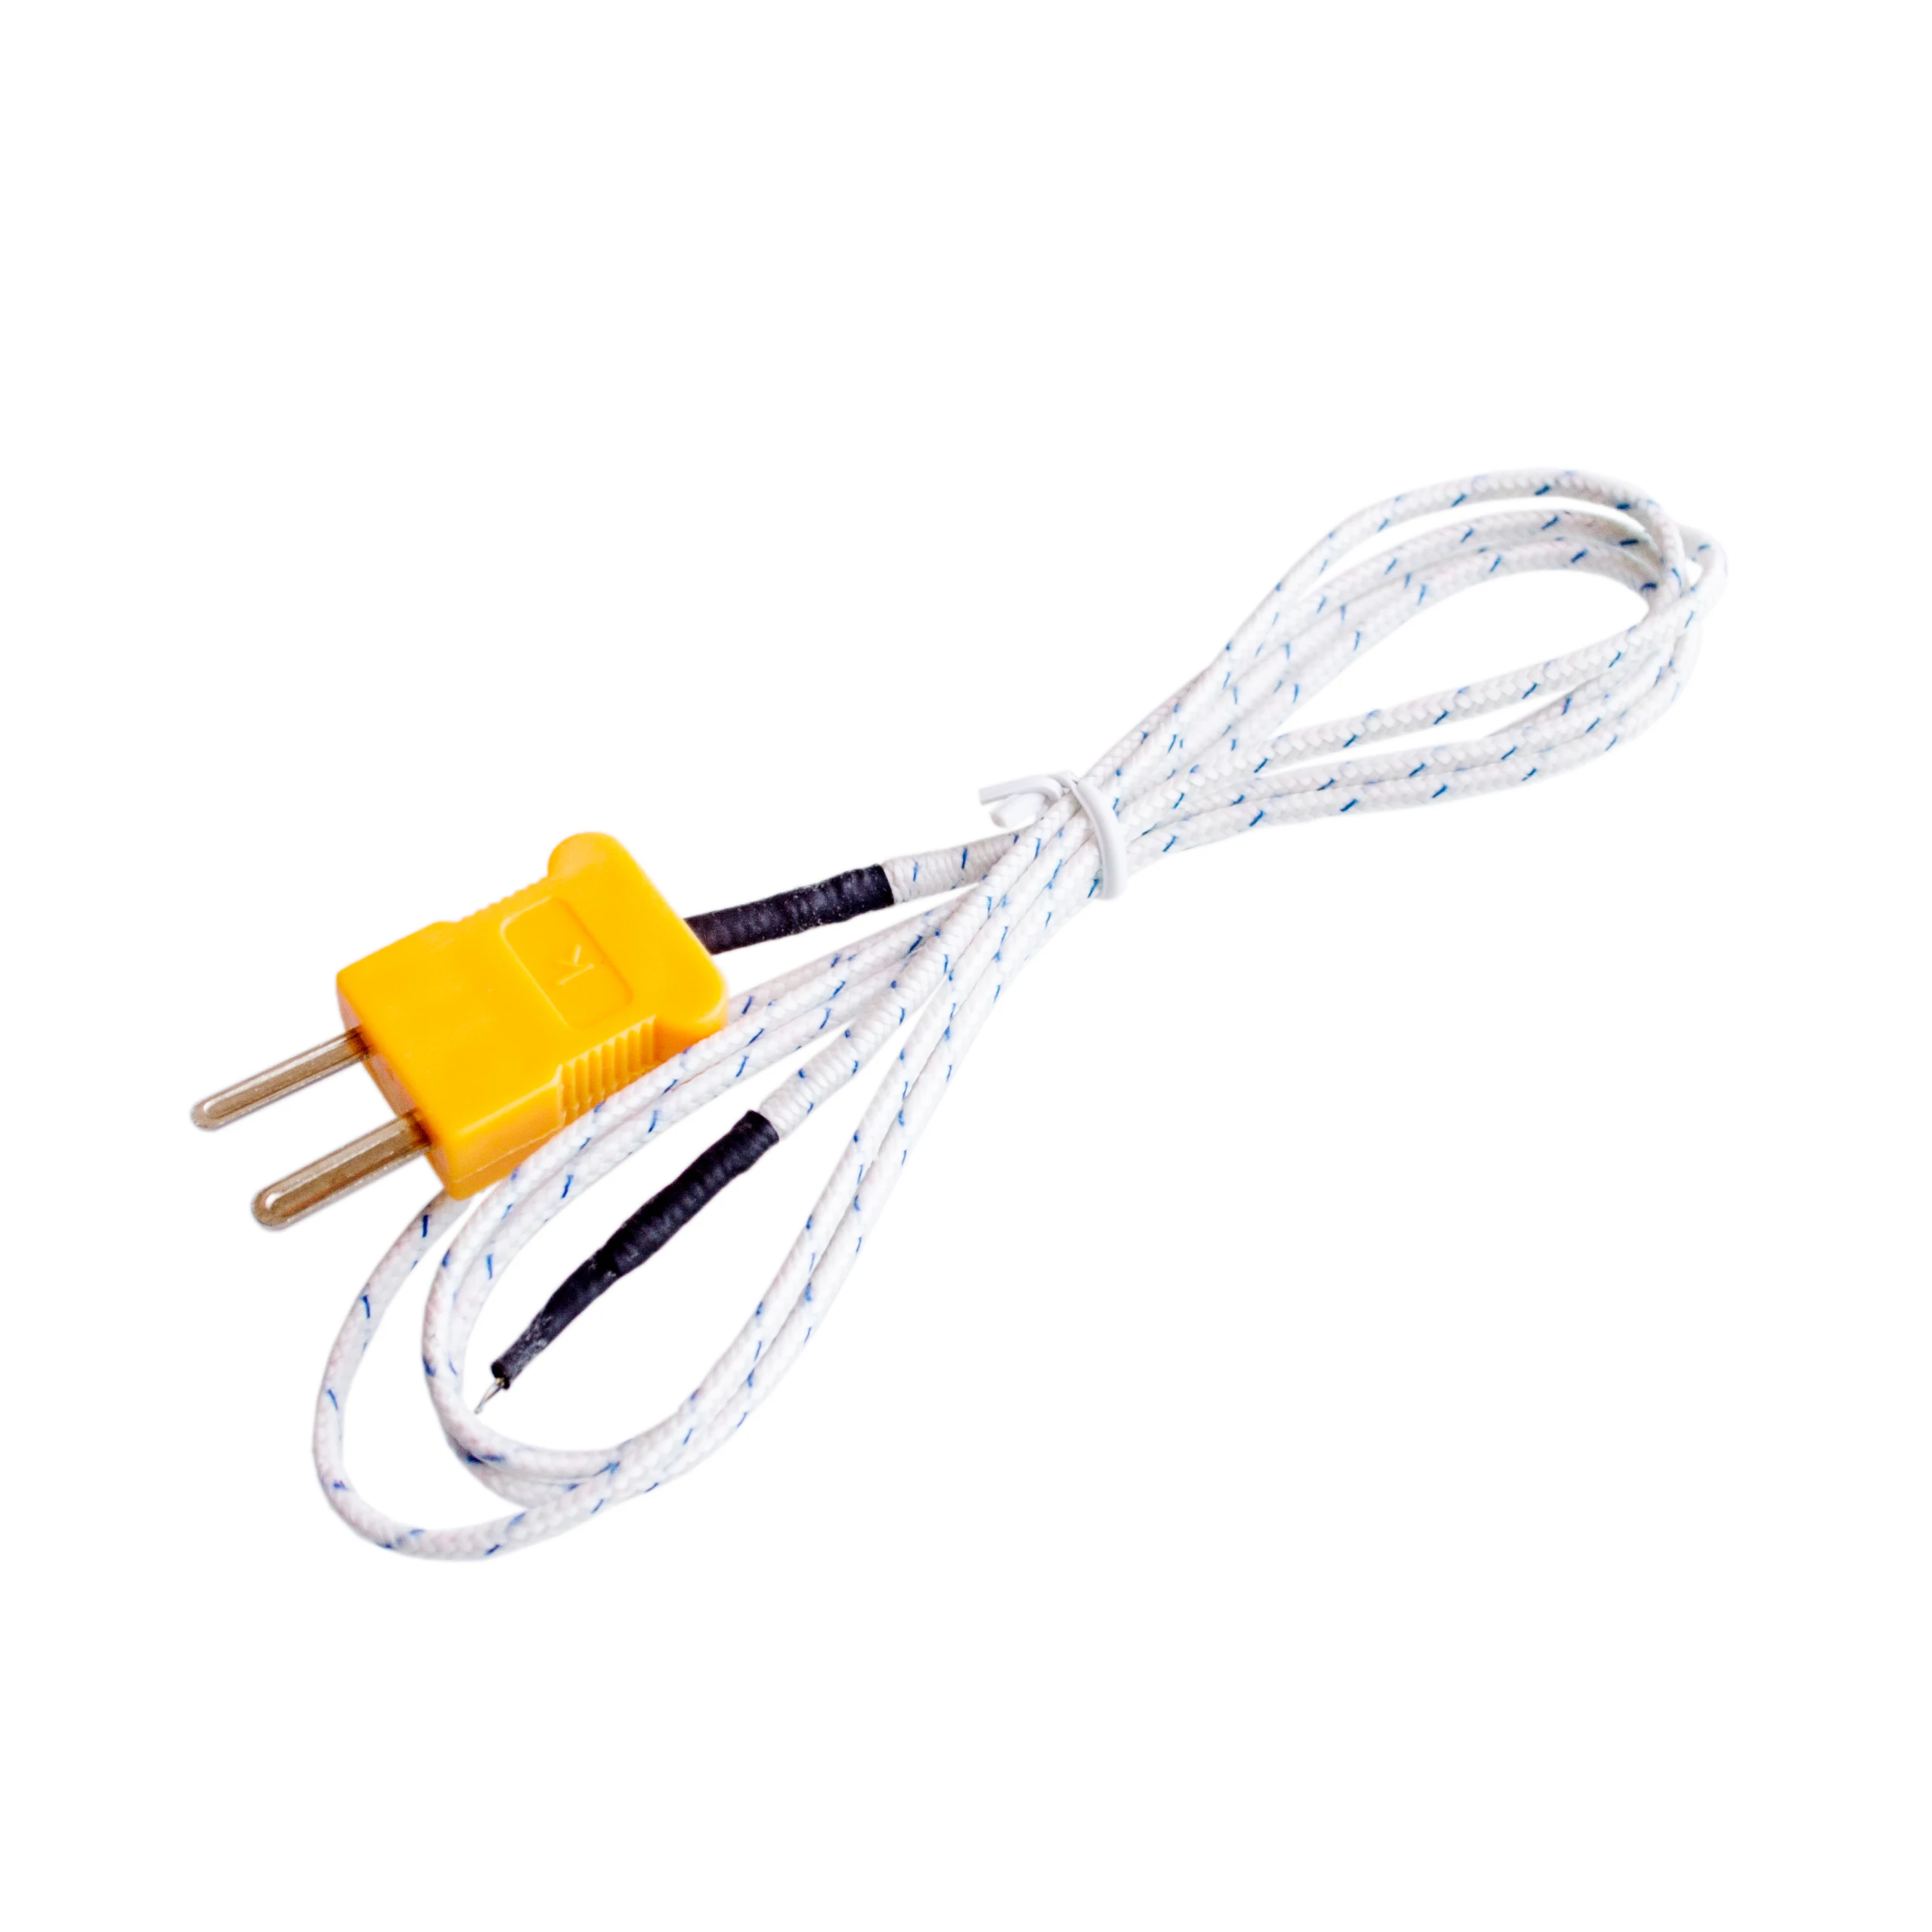 1PC K type temperature sensor thermocouple probe cable wire 0.5/4RCUSHAfi 